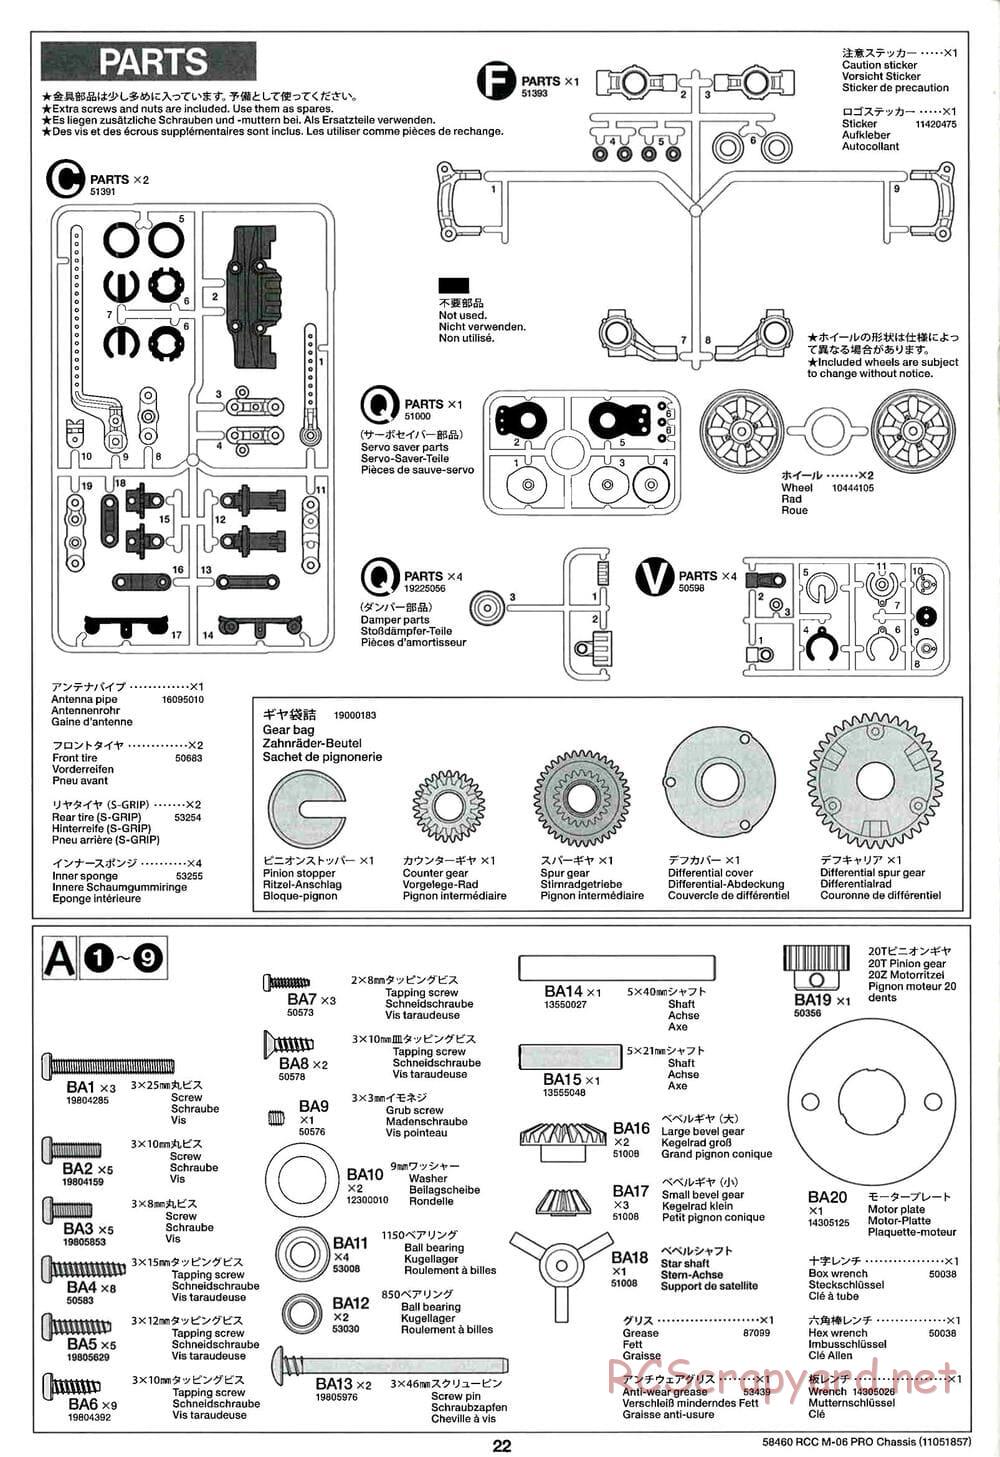 Tamiya - M-06 Pro Chassis - Manual - Page 22